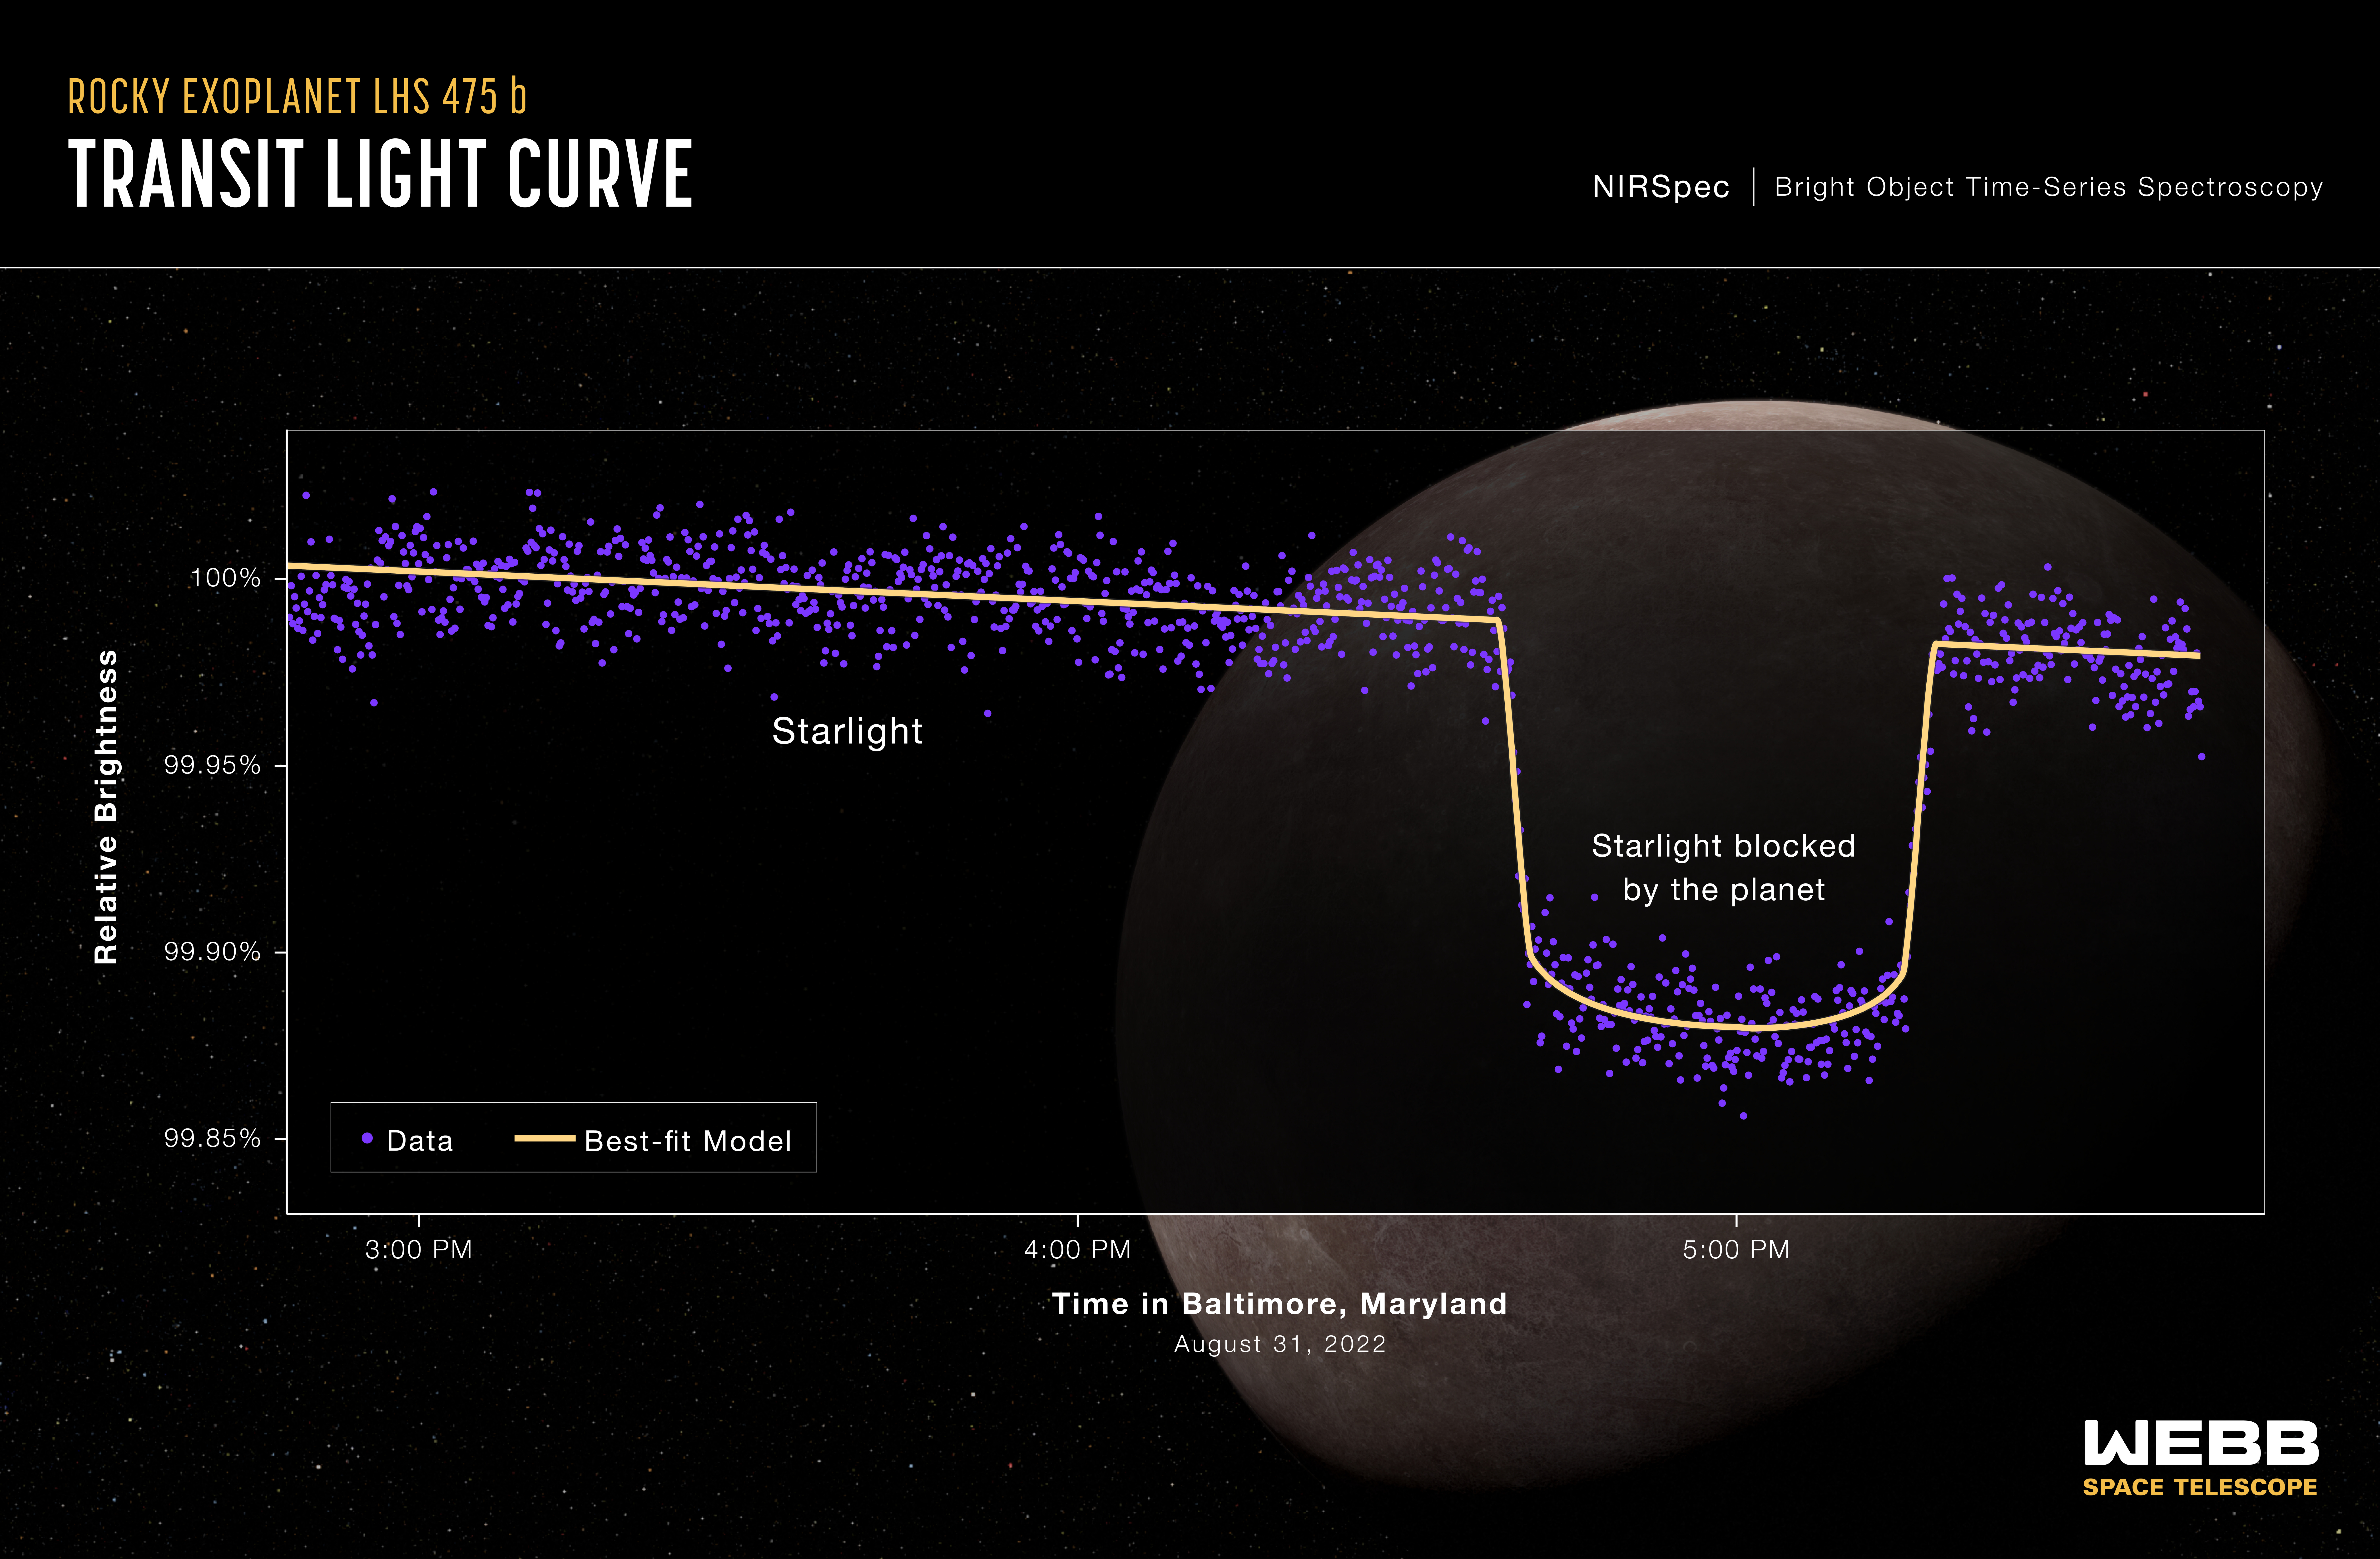 Curva de luz de tránsito del exoplaneta LHS 475 b captada por la cámara NIRSpec